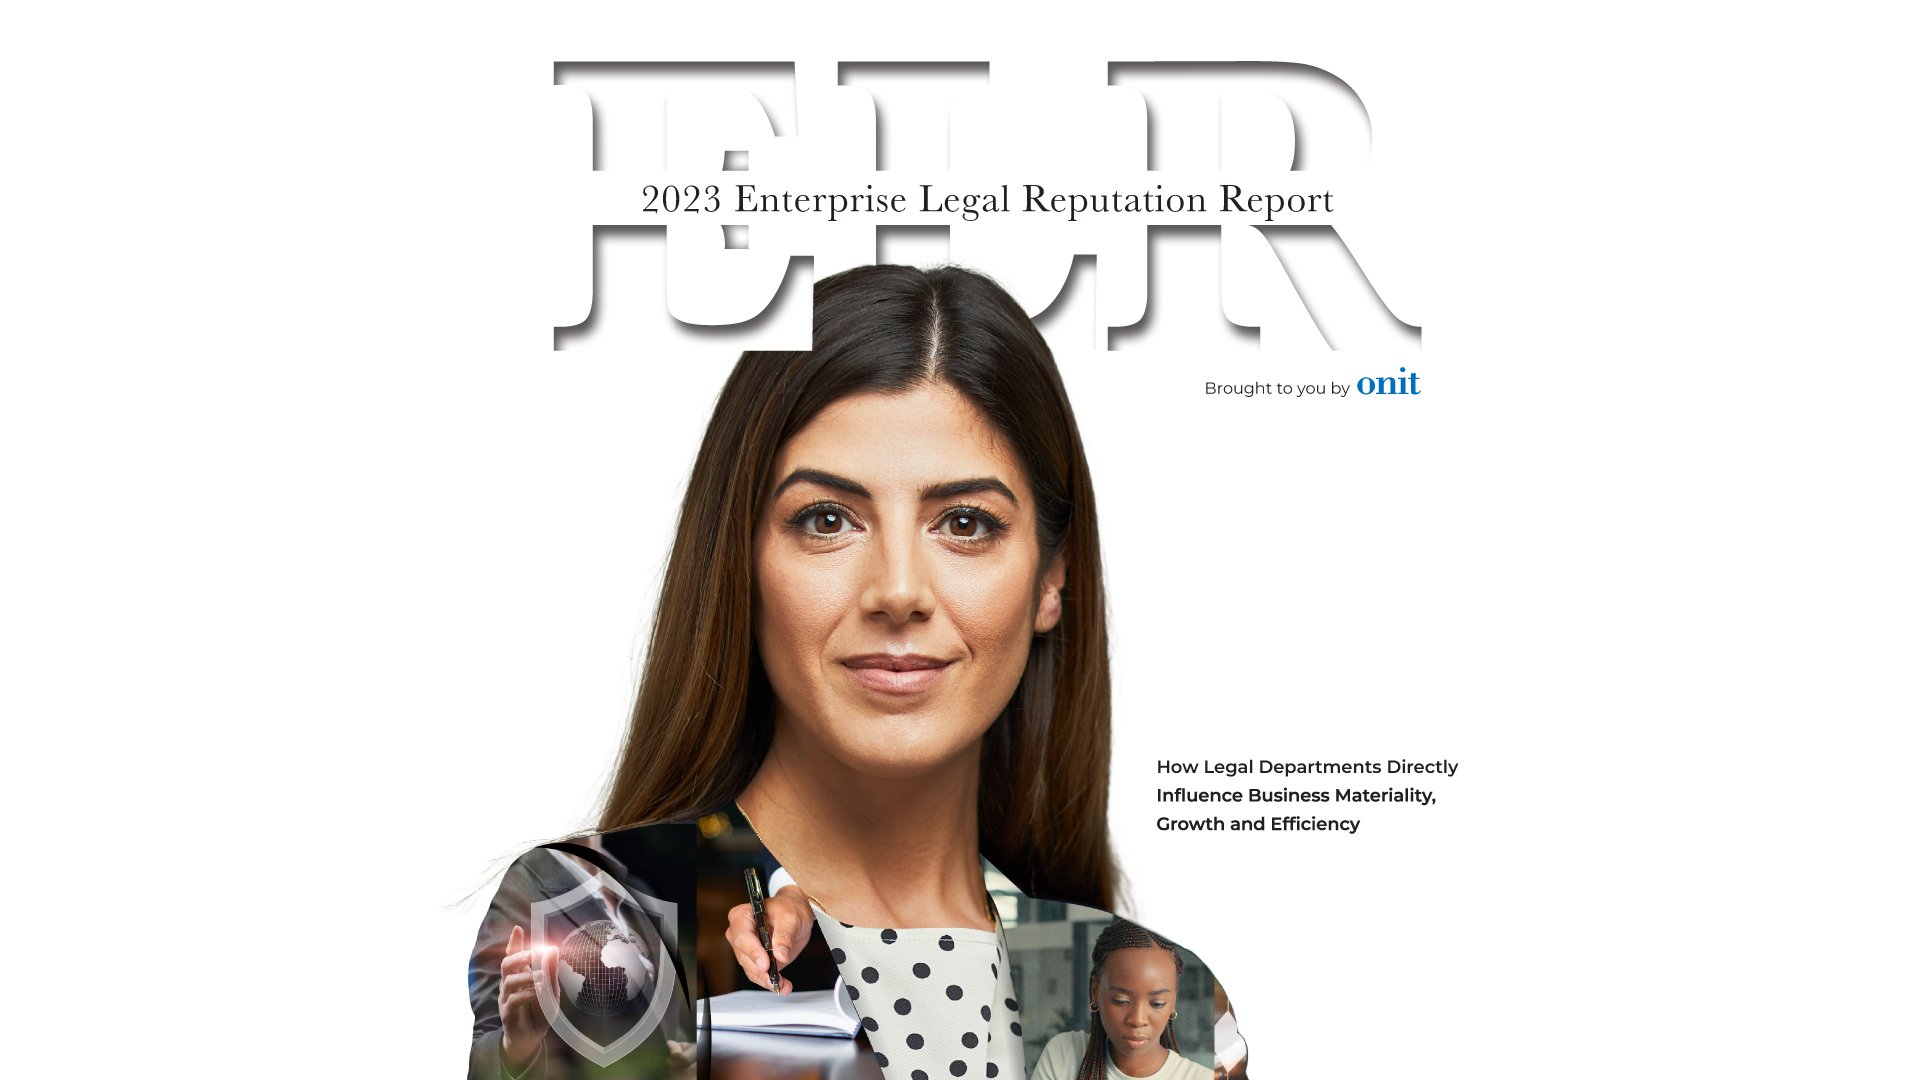 Enterprise Legal Reputation Report 2023